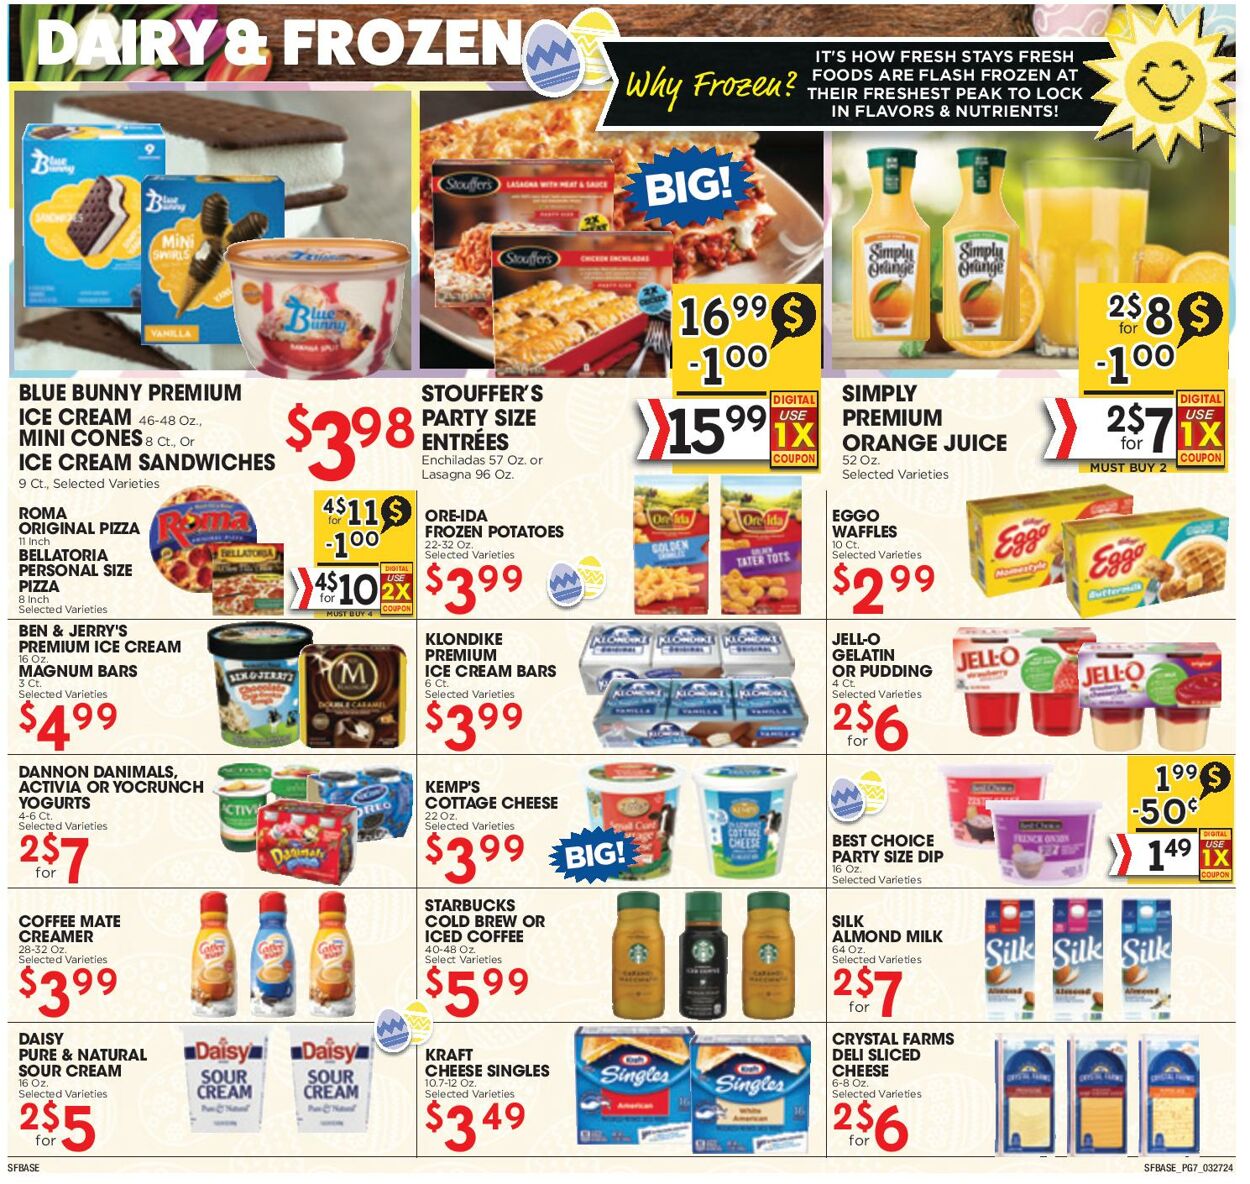 Weekly ad Sunshine Foods 03/27/2024 - 04/02/2024